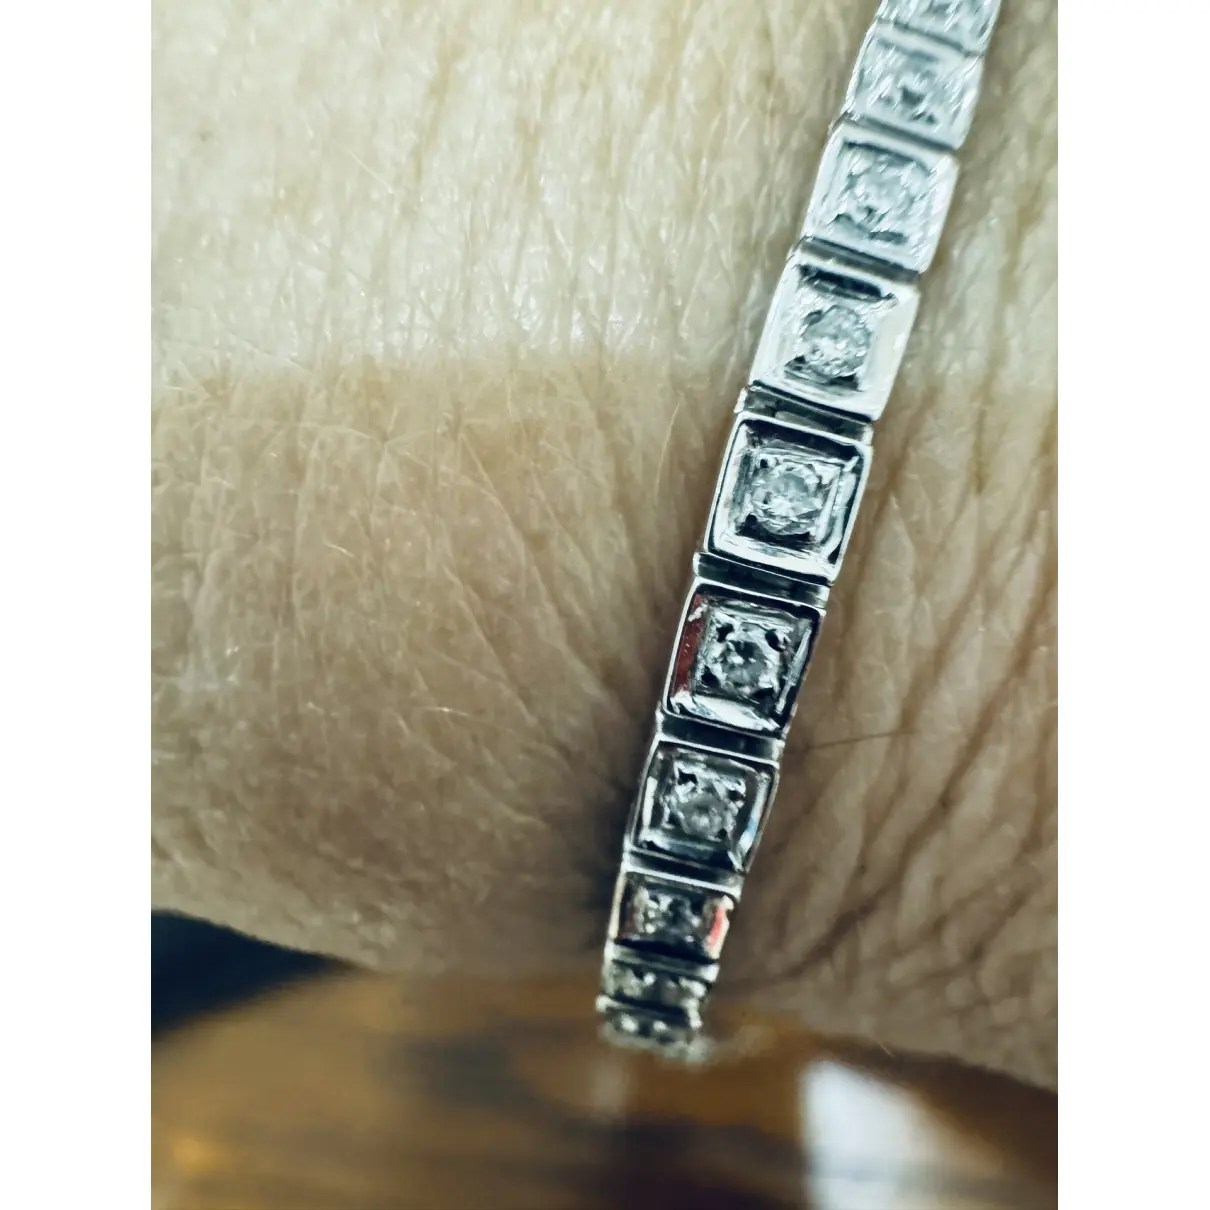 Buy Rivieras White gold bracelet online